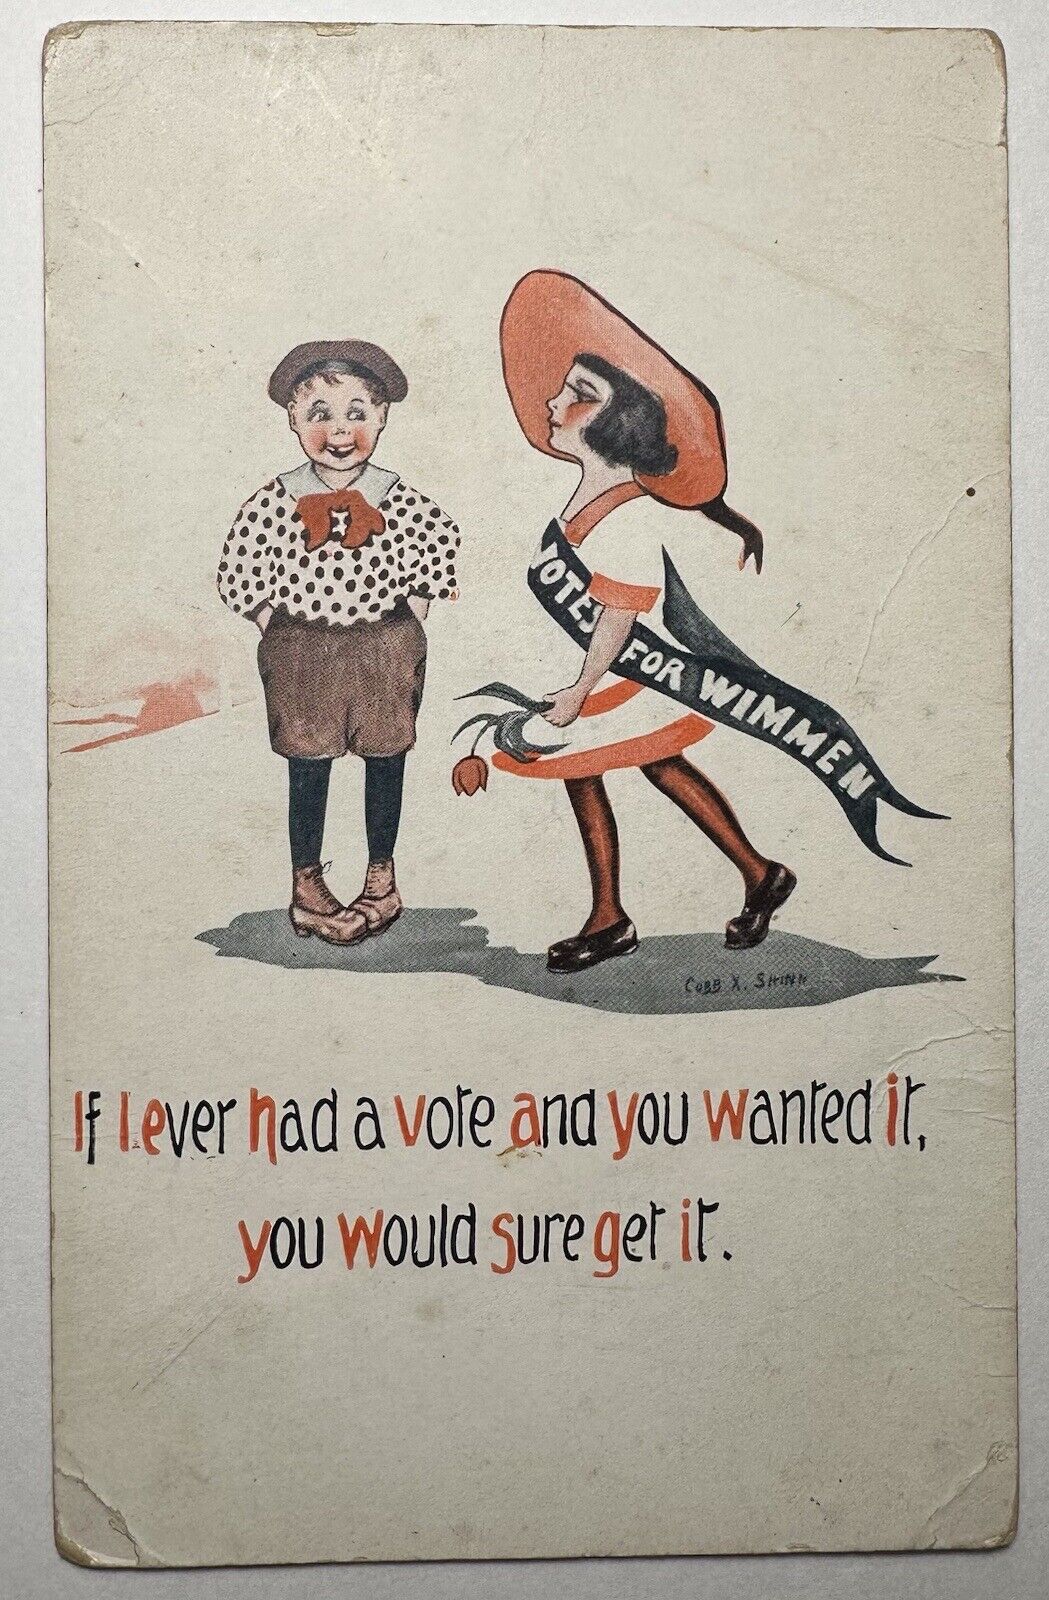 c. 1914 Cobb X Shinn Comic Postcard Votes For Women Suffragette Movement Posted